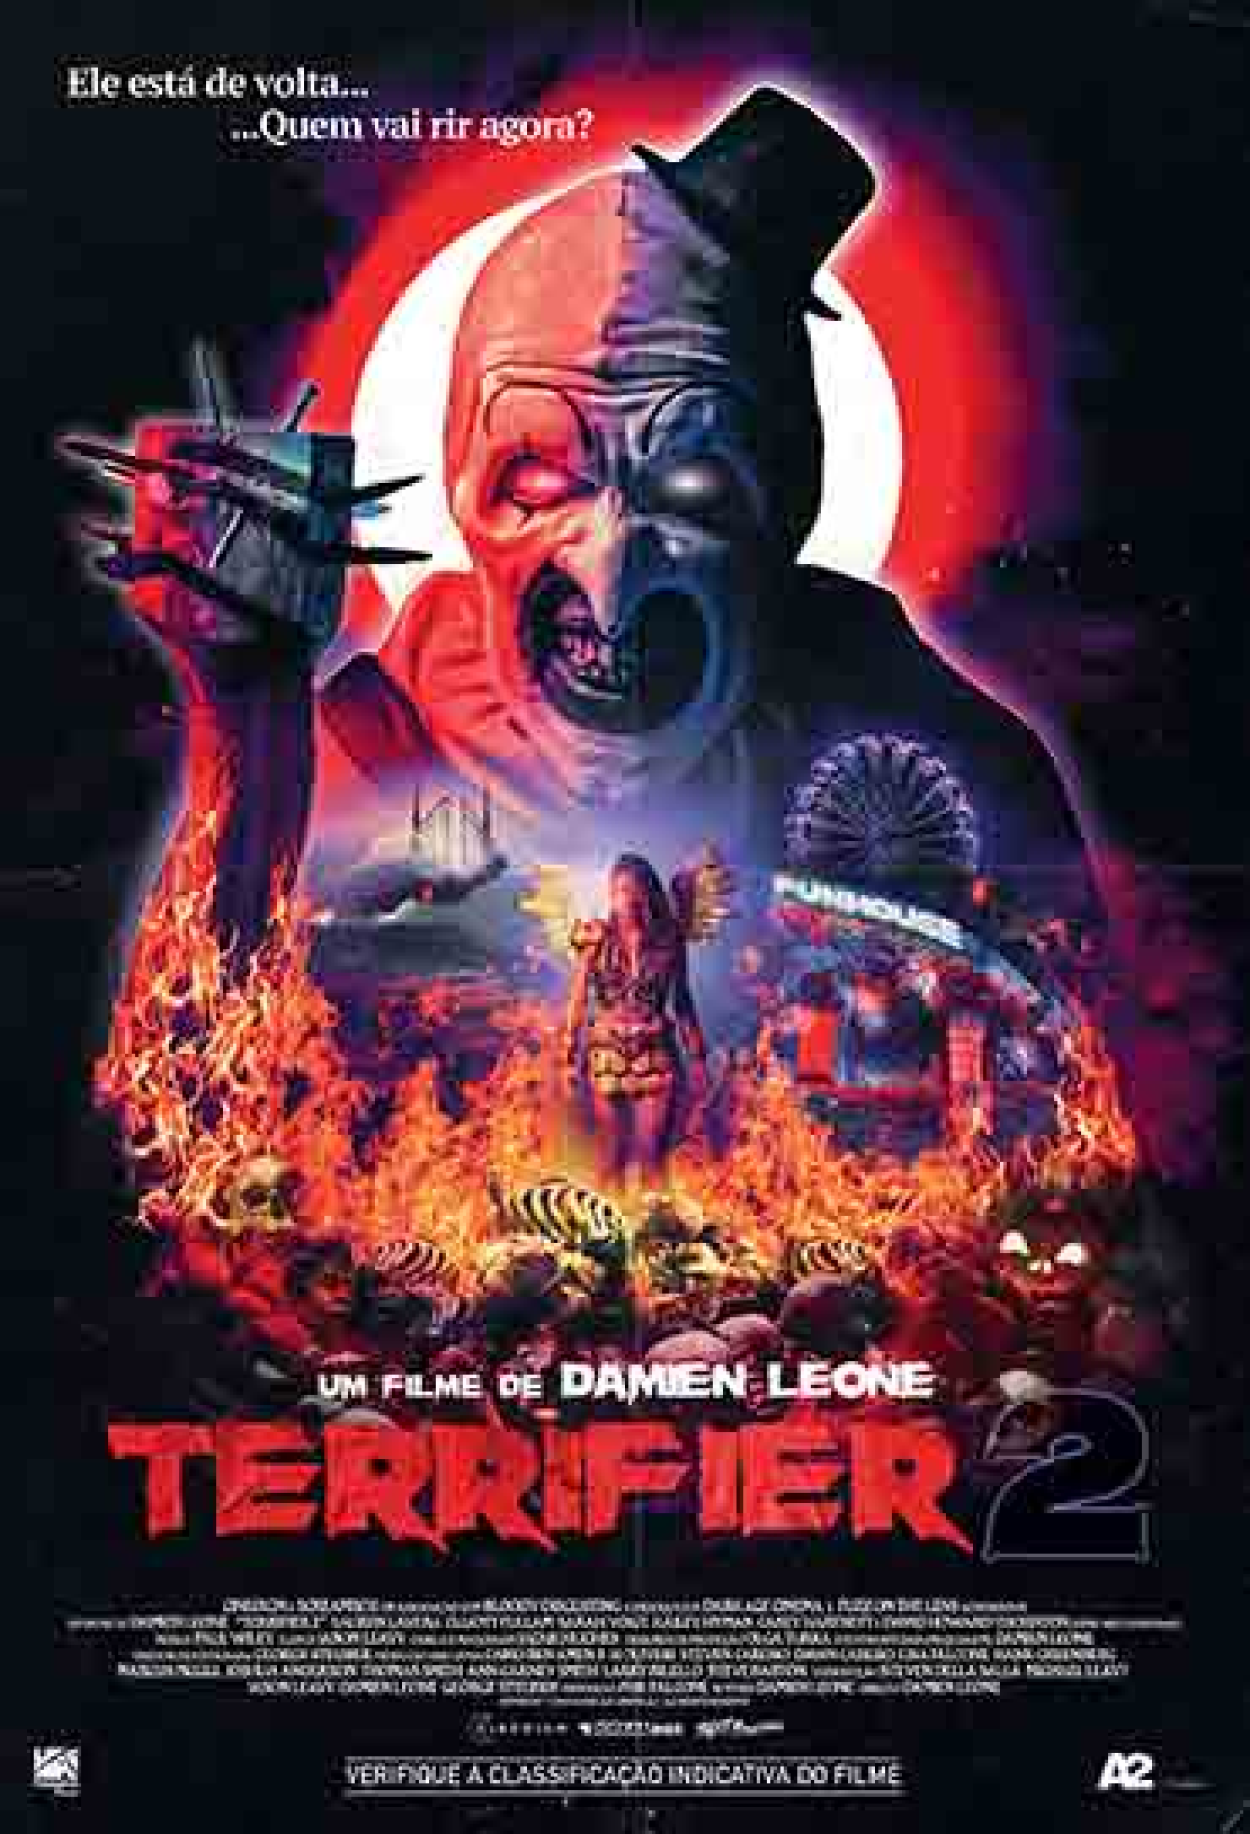 Terrifier 2 (Filme), Trailer, Sinopse e Curiosidades - Cinema10